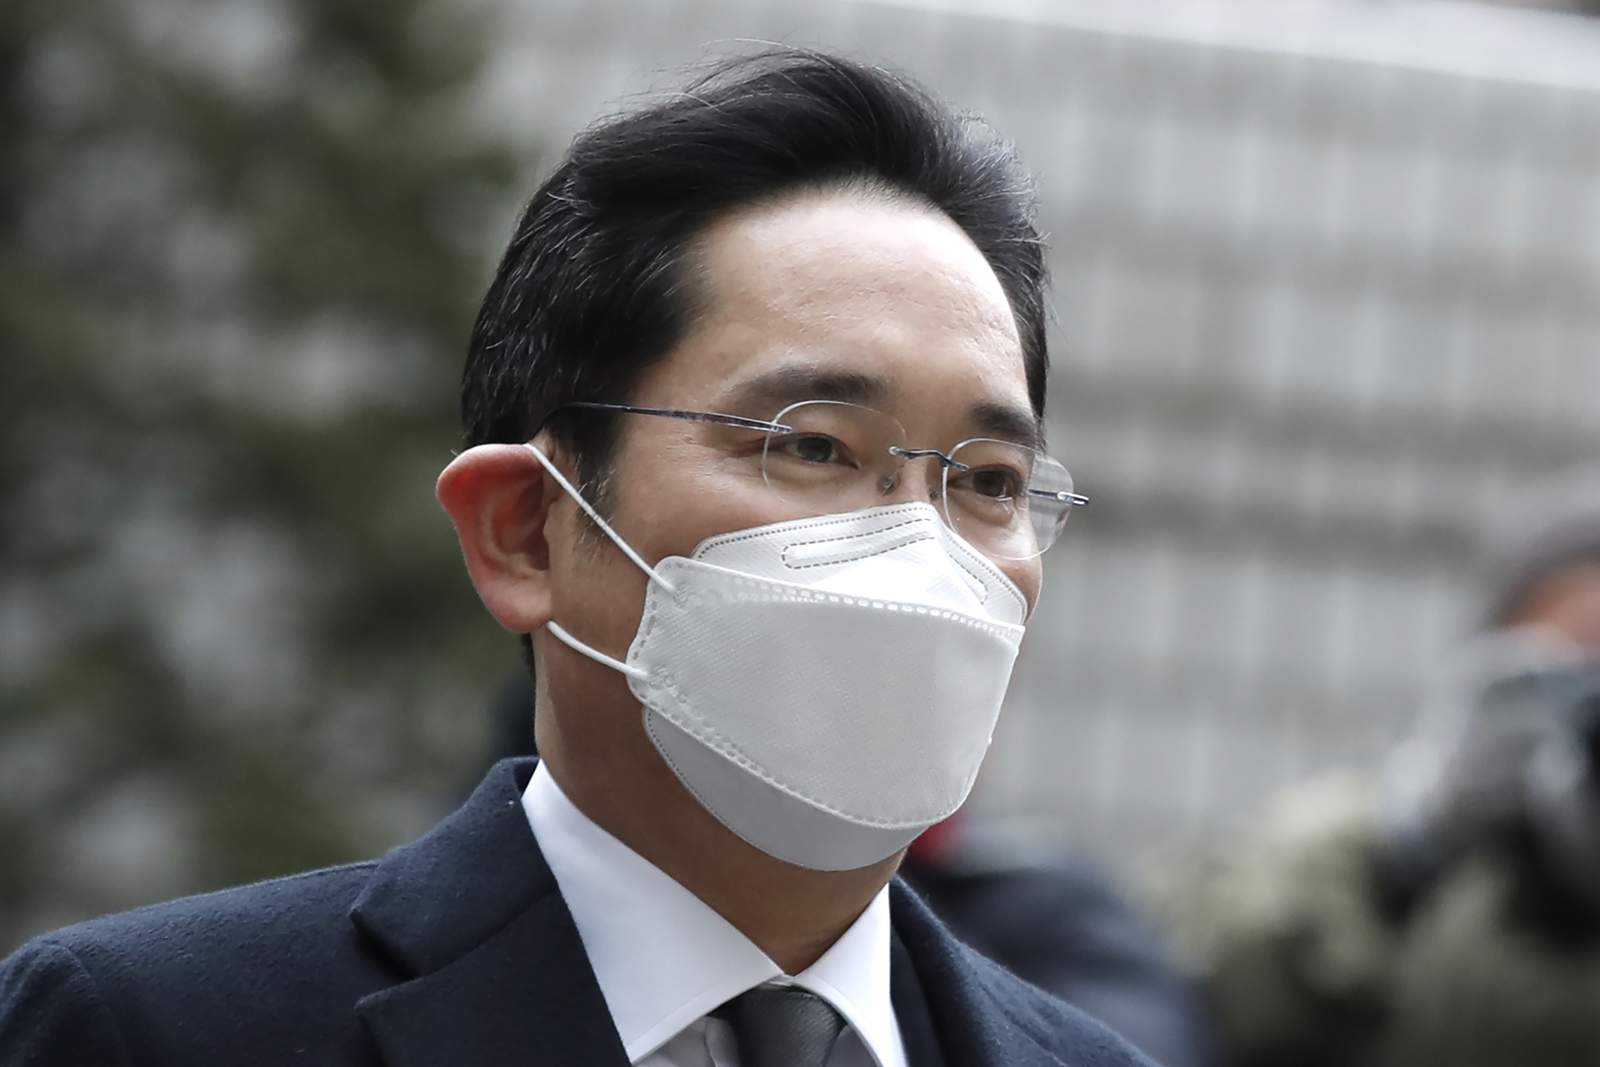 Samsung scion Lee won't appeal prison sentence for bribery